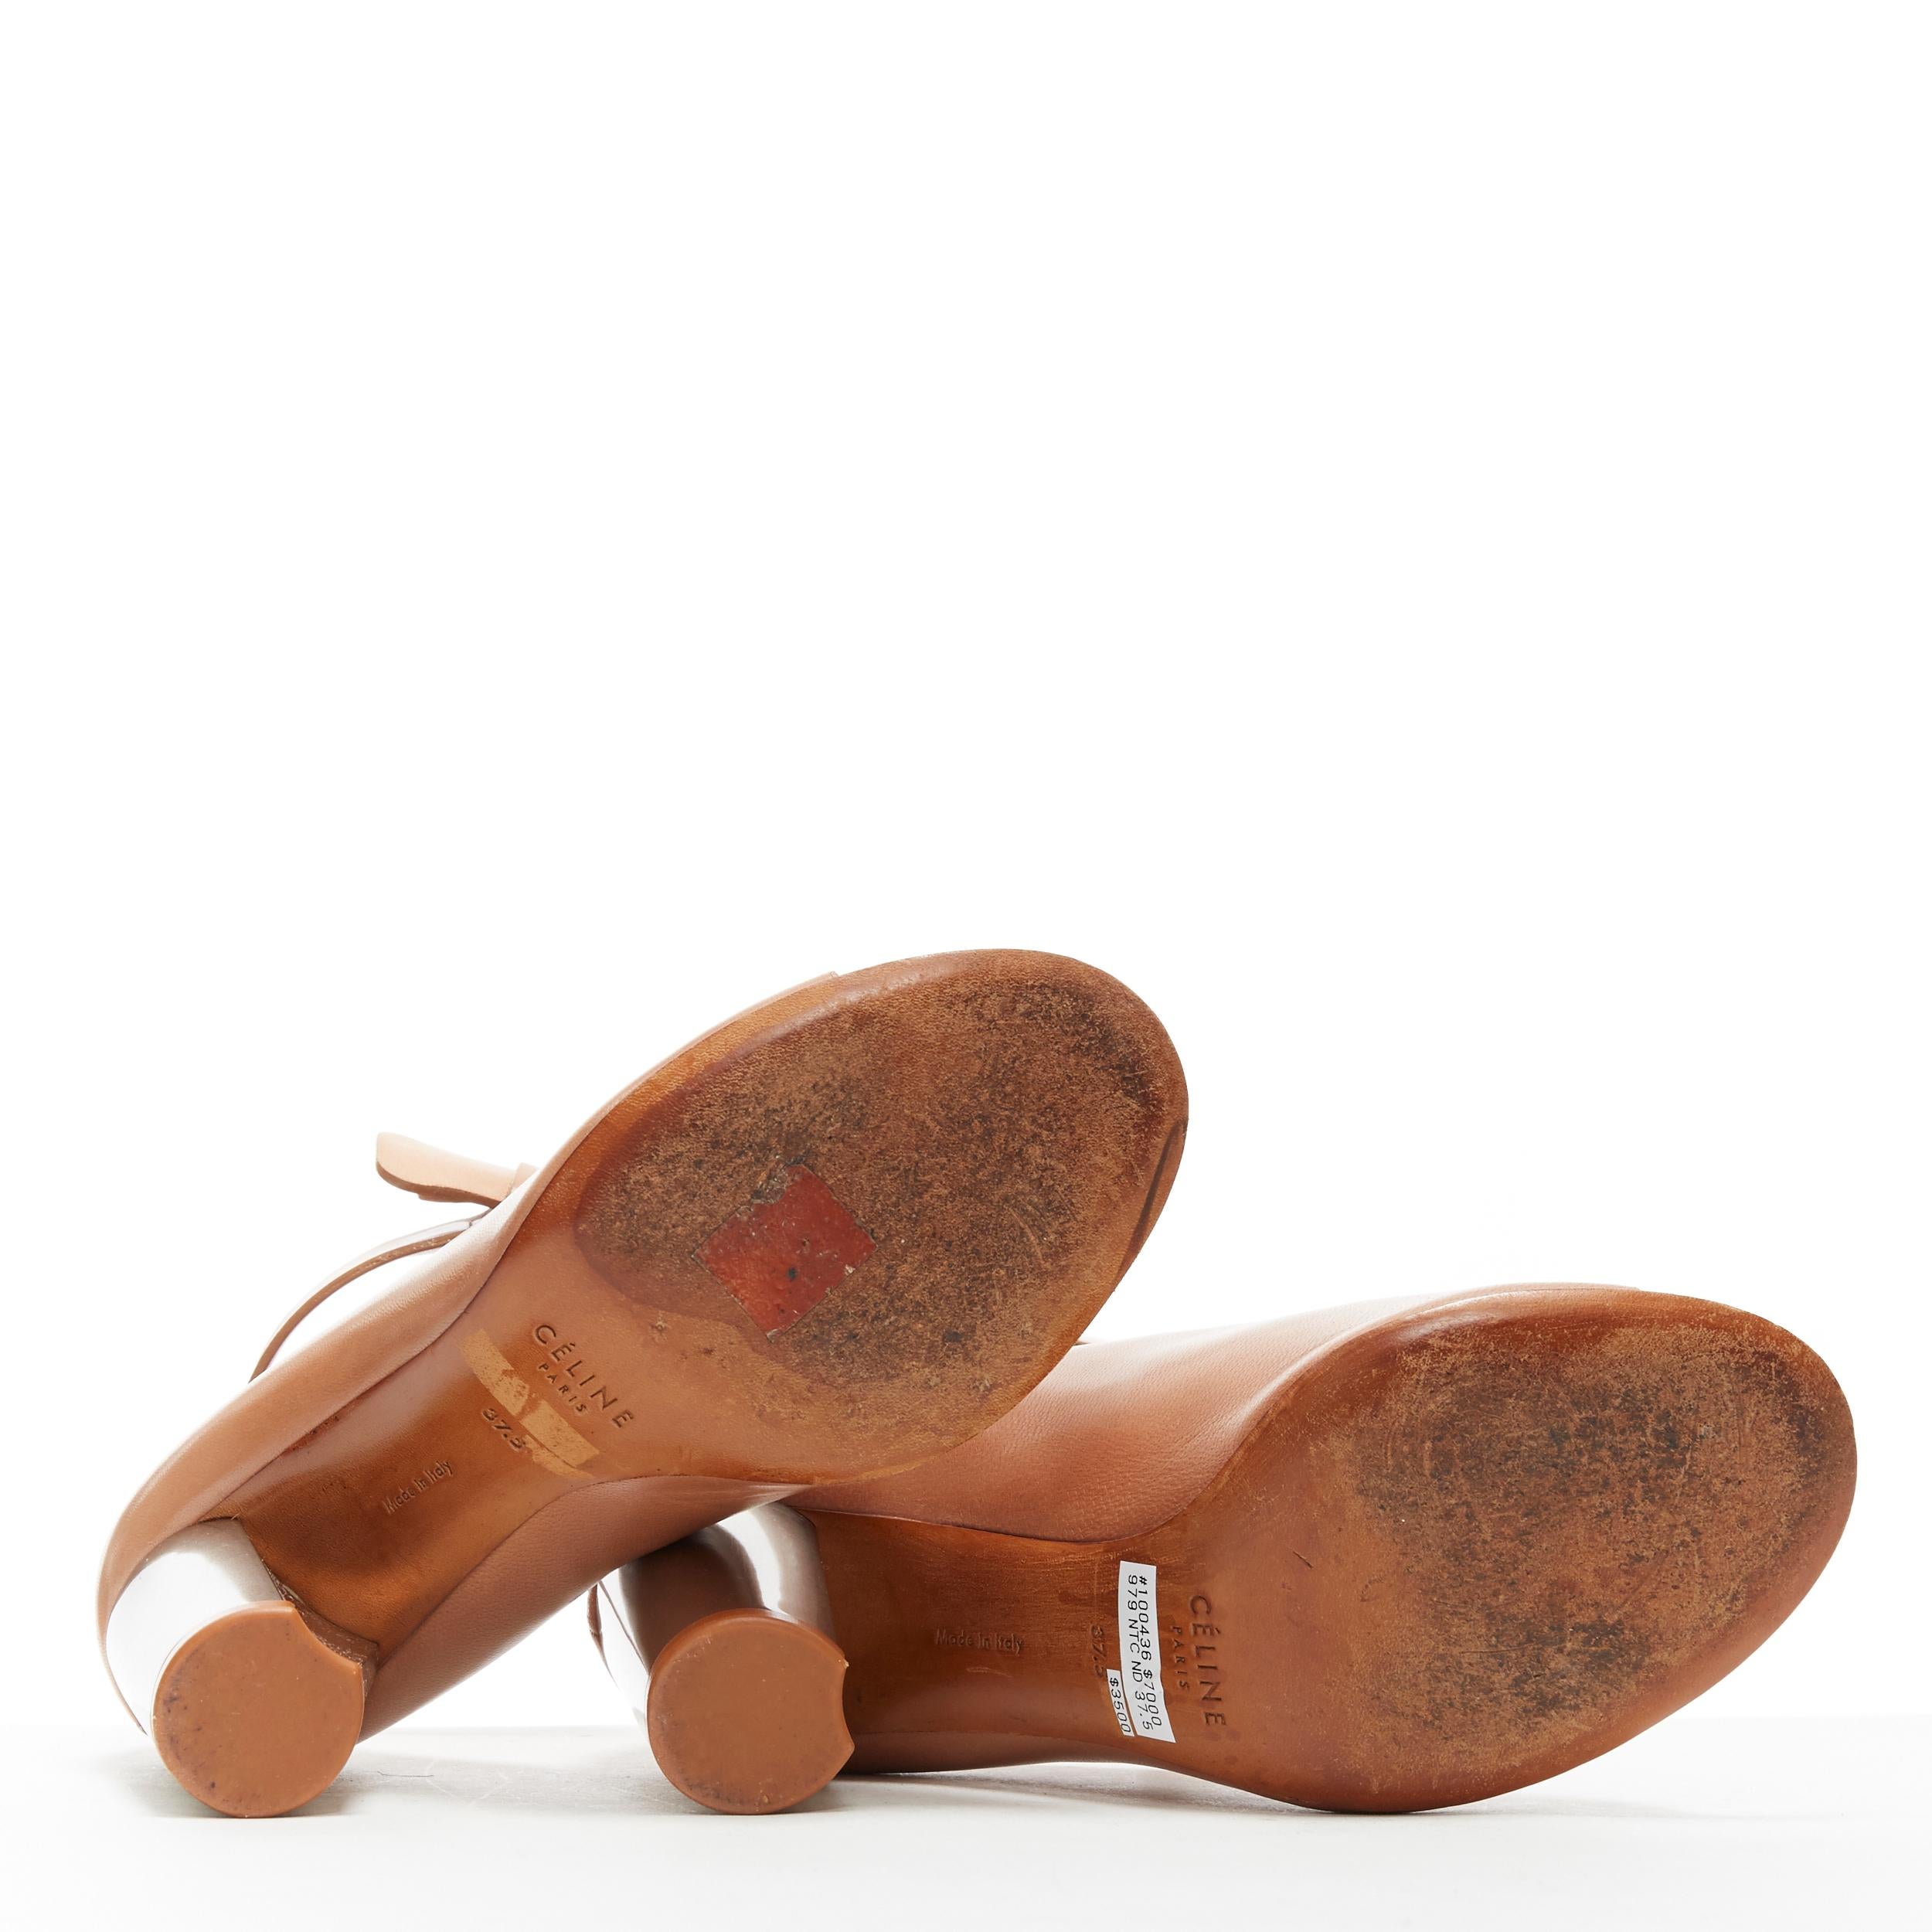 Brown CELINE PHOEBE PHILO tan brown leather open toe silver metal glove heel EU37.5